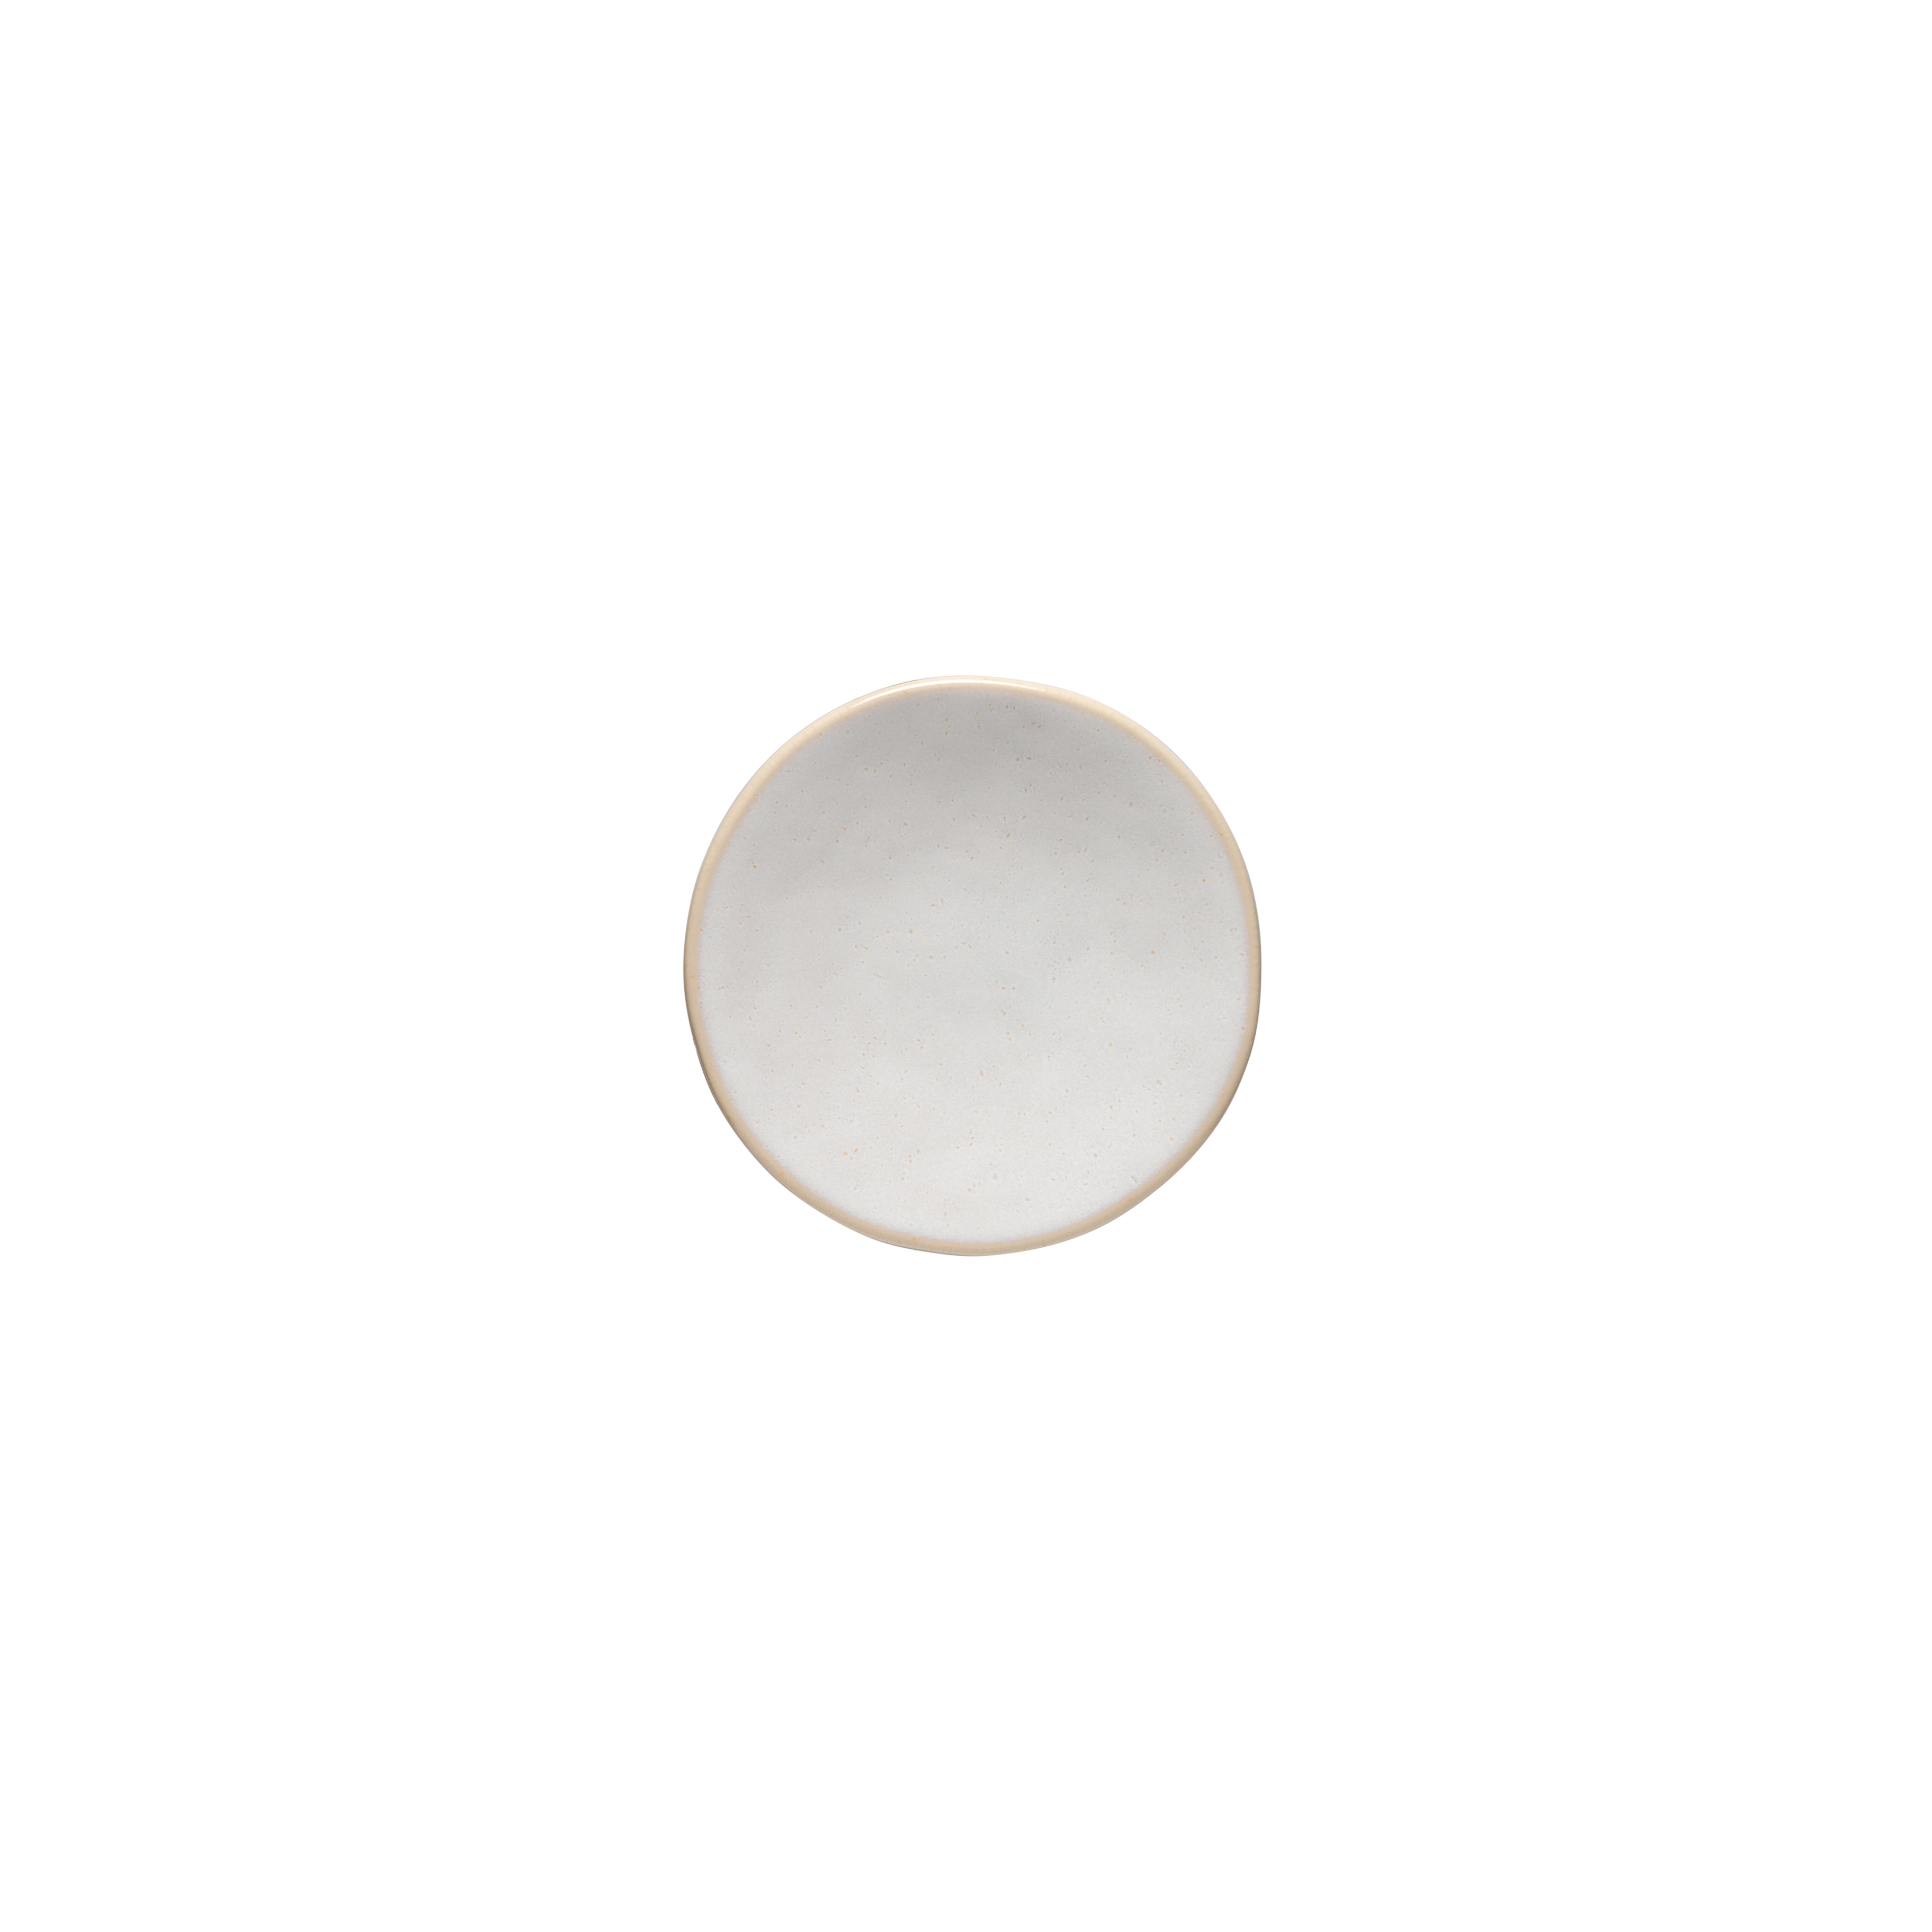 Roda White Round Plate 12.5cm Gift